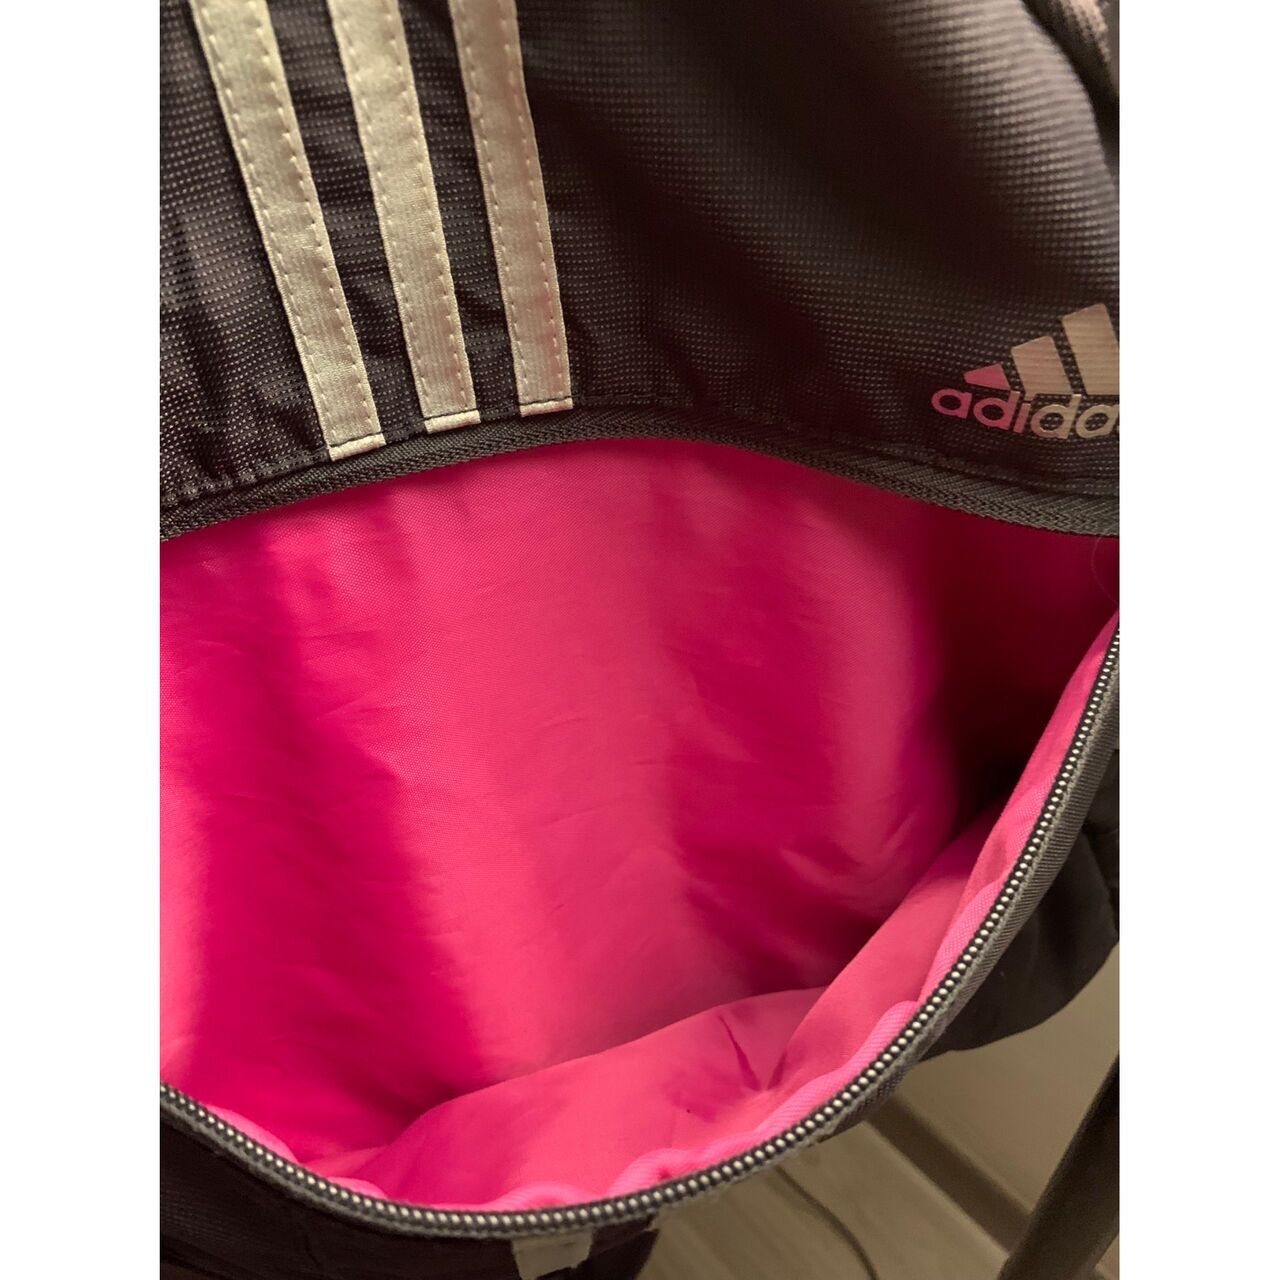 Adidas Grey & Pink Satchel